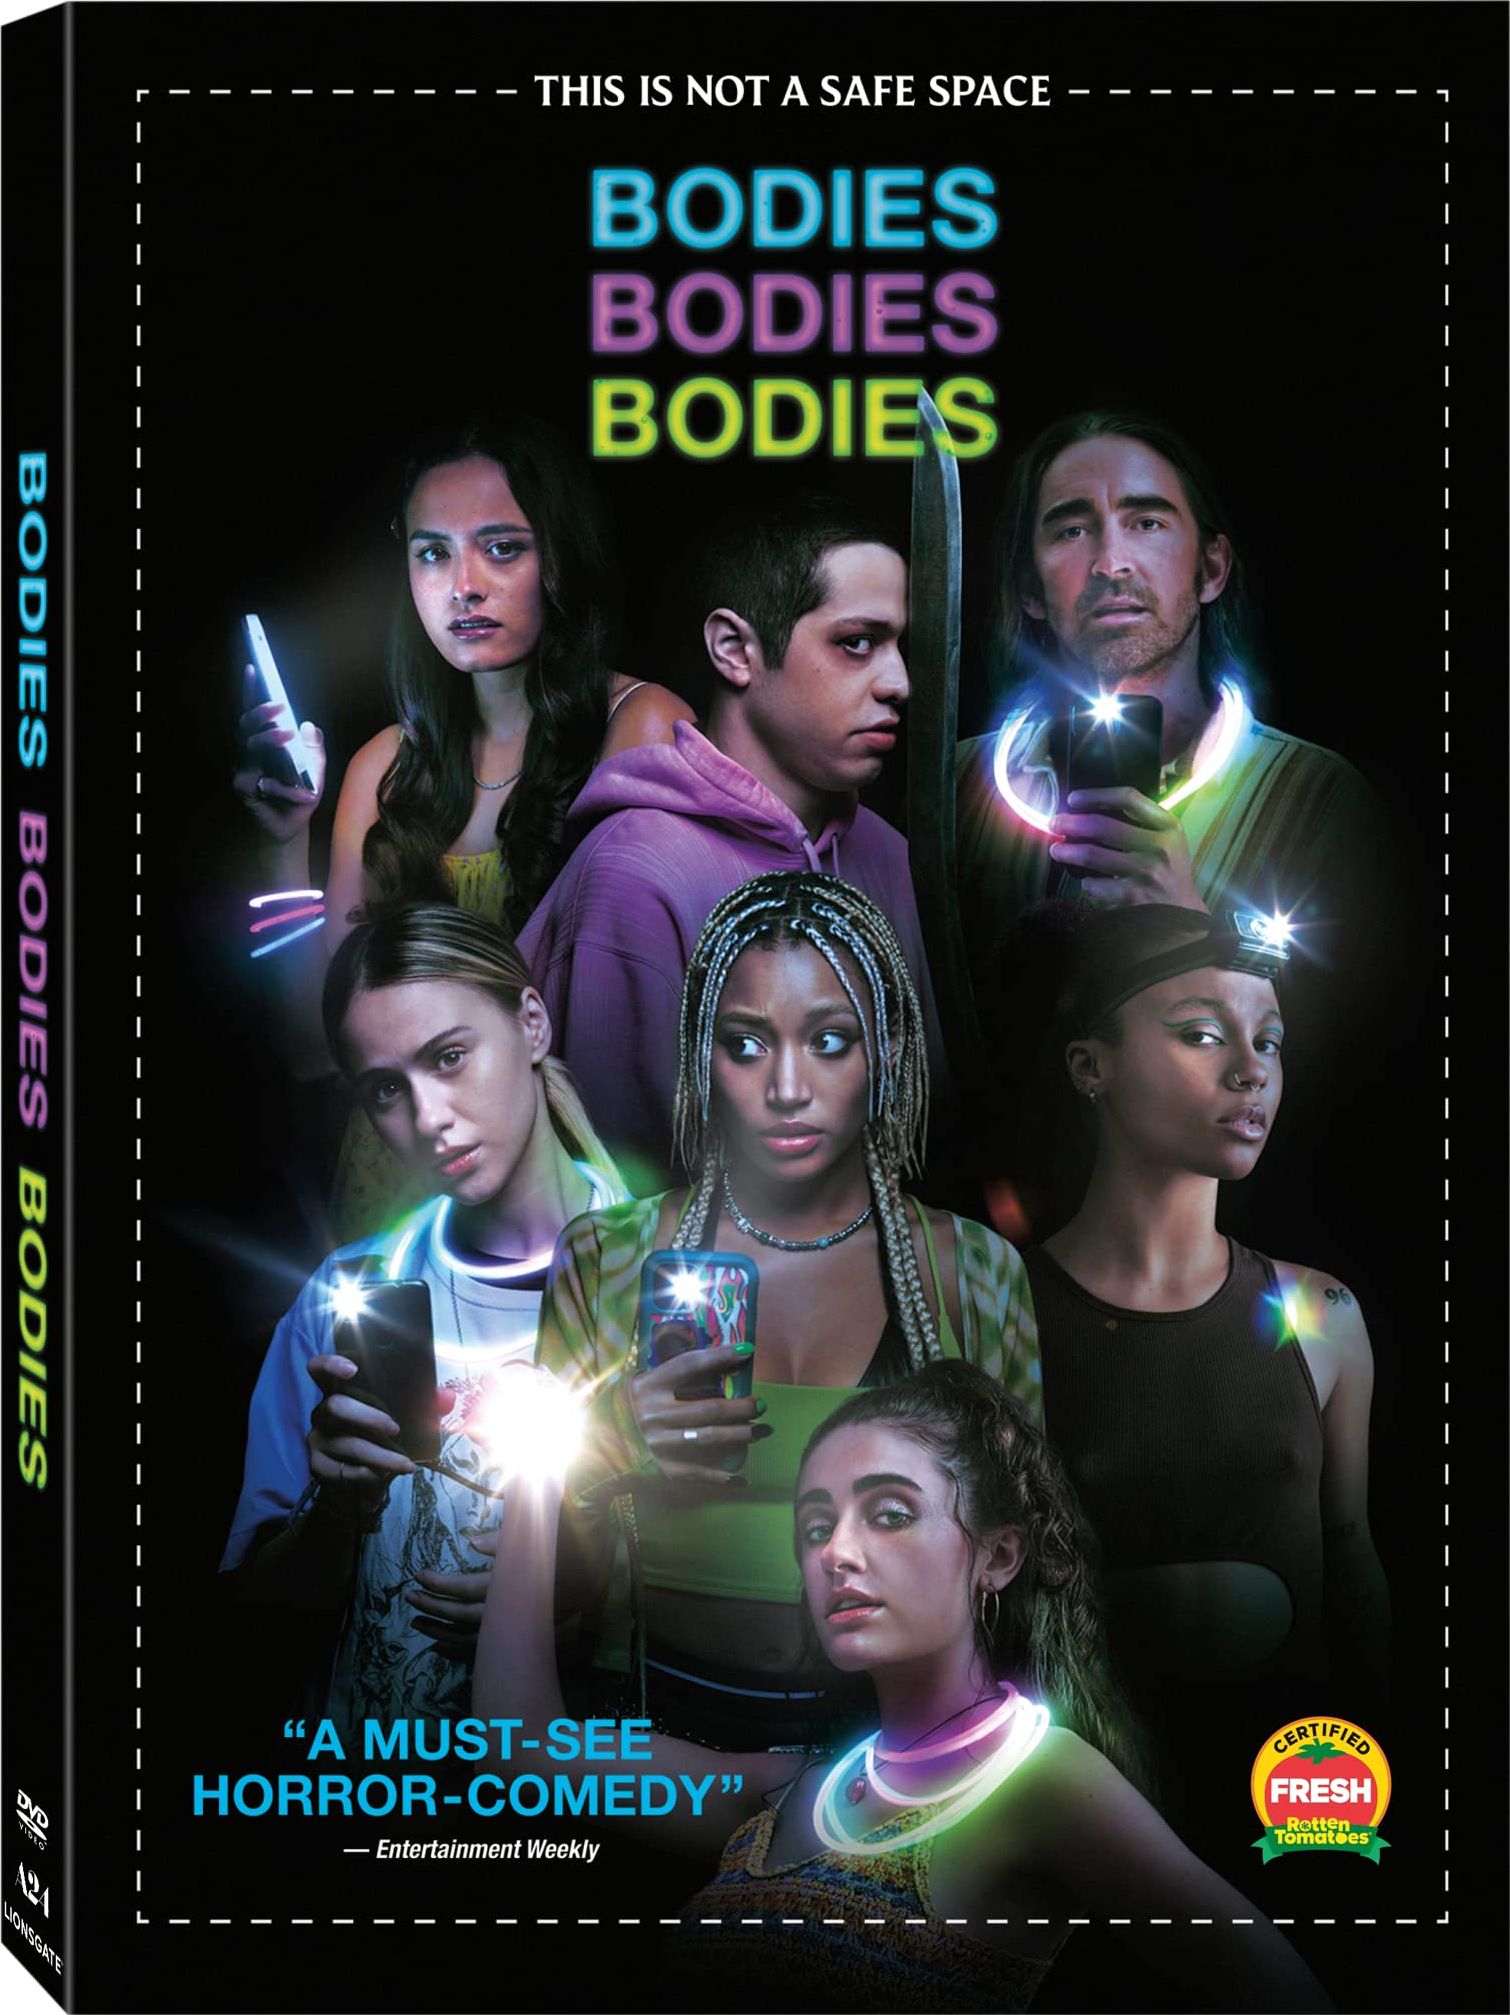 https://www.dvdsreleasedates.com/covers/bodies-bodies-bodies-dvd-cover-95.jpg